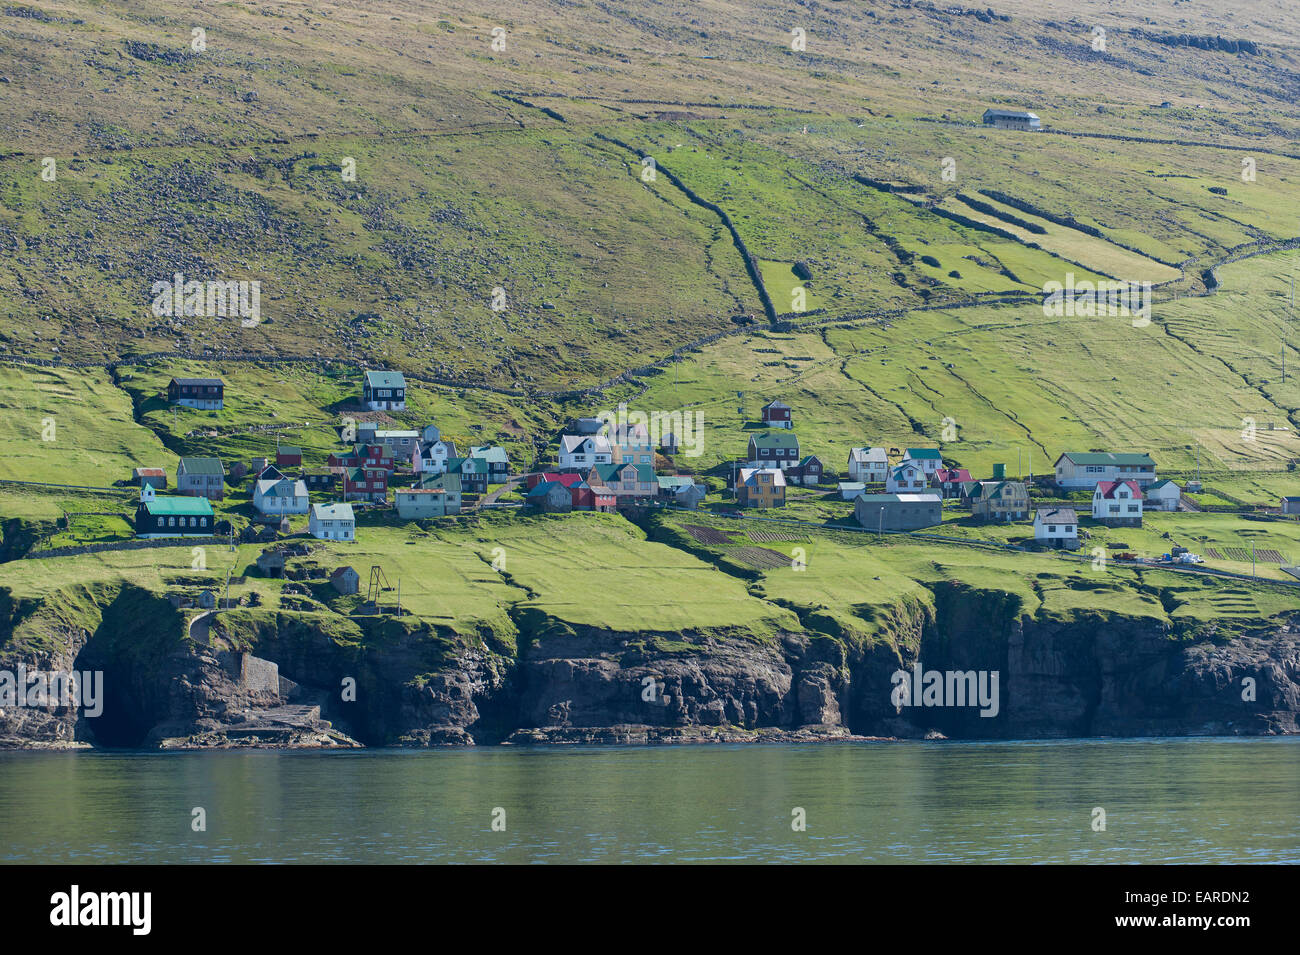 Felsen, Wiesen, Dorf von Abwanderung bedroht Kirkja, Fugloy, Norðoyar, Färöer Inseln, Dänemark Stockfoto